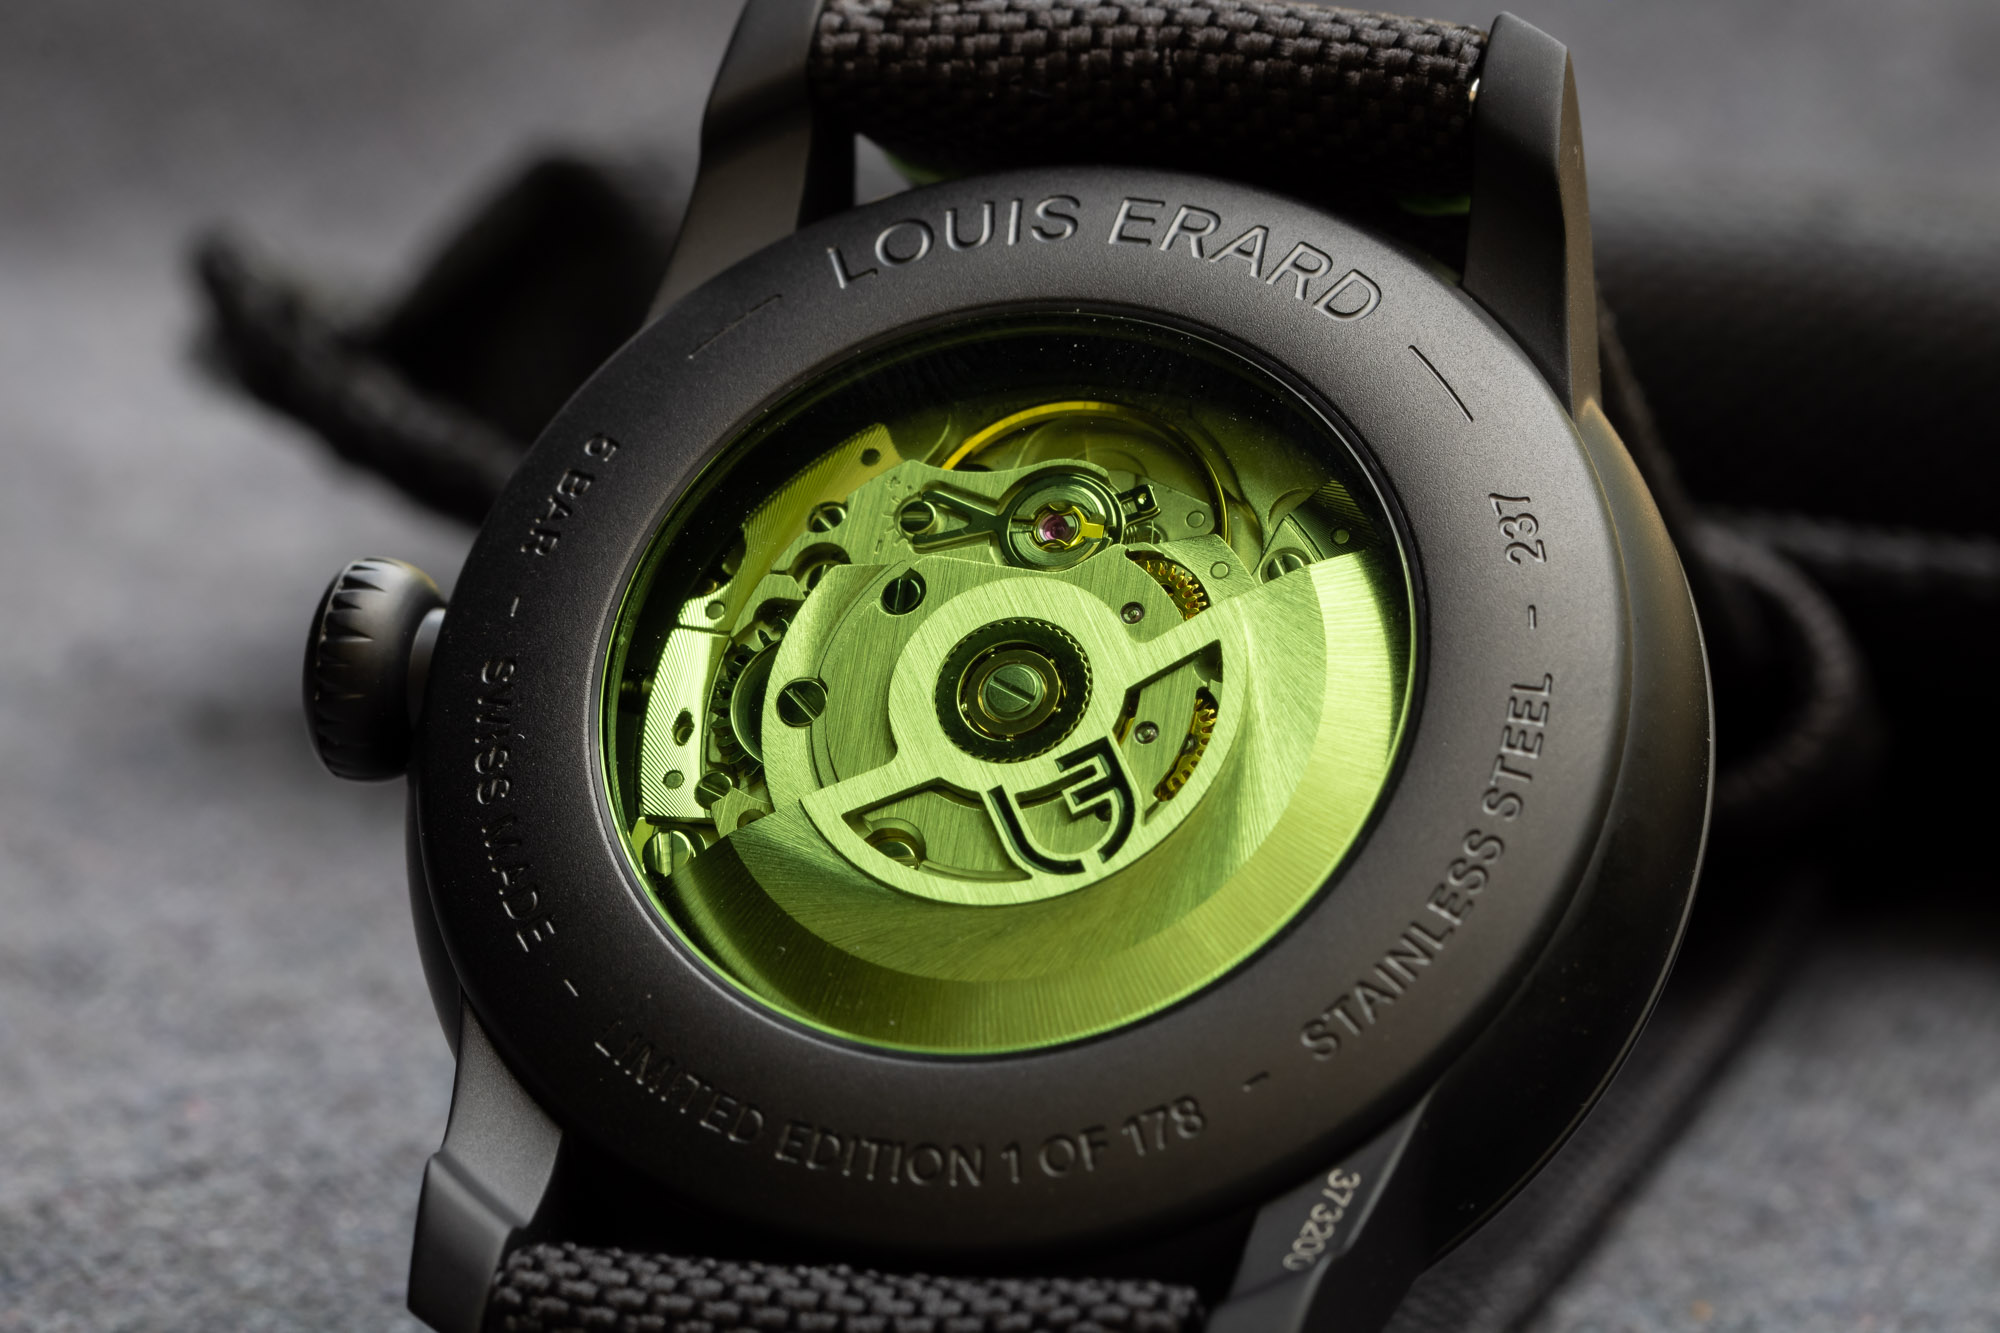 Watch Lust: Louis Erard Regulator w/ Power Reserve in Black